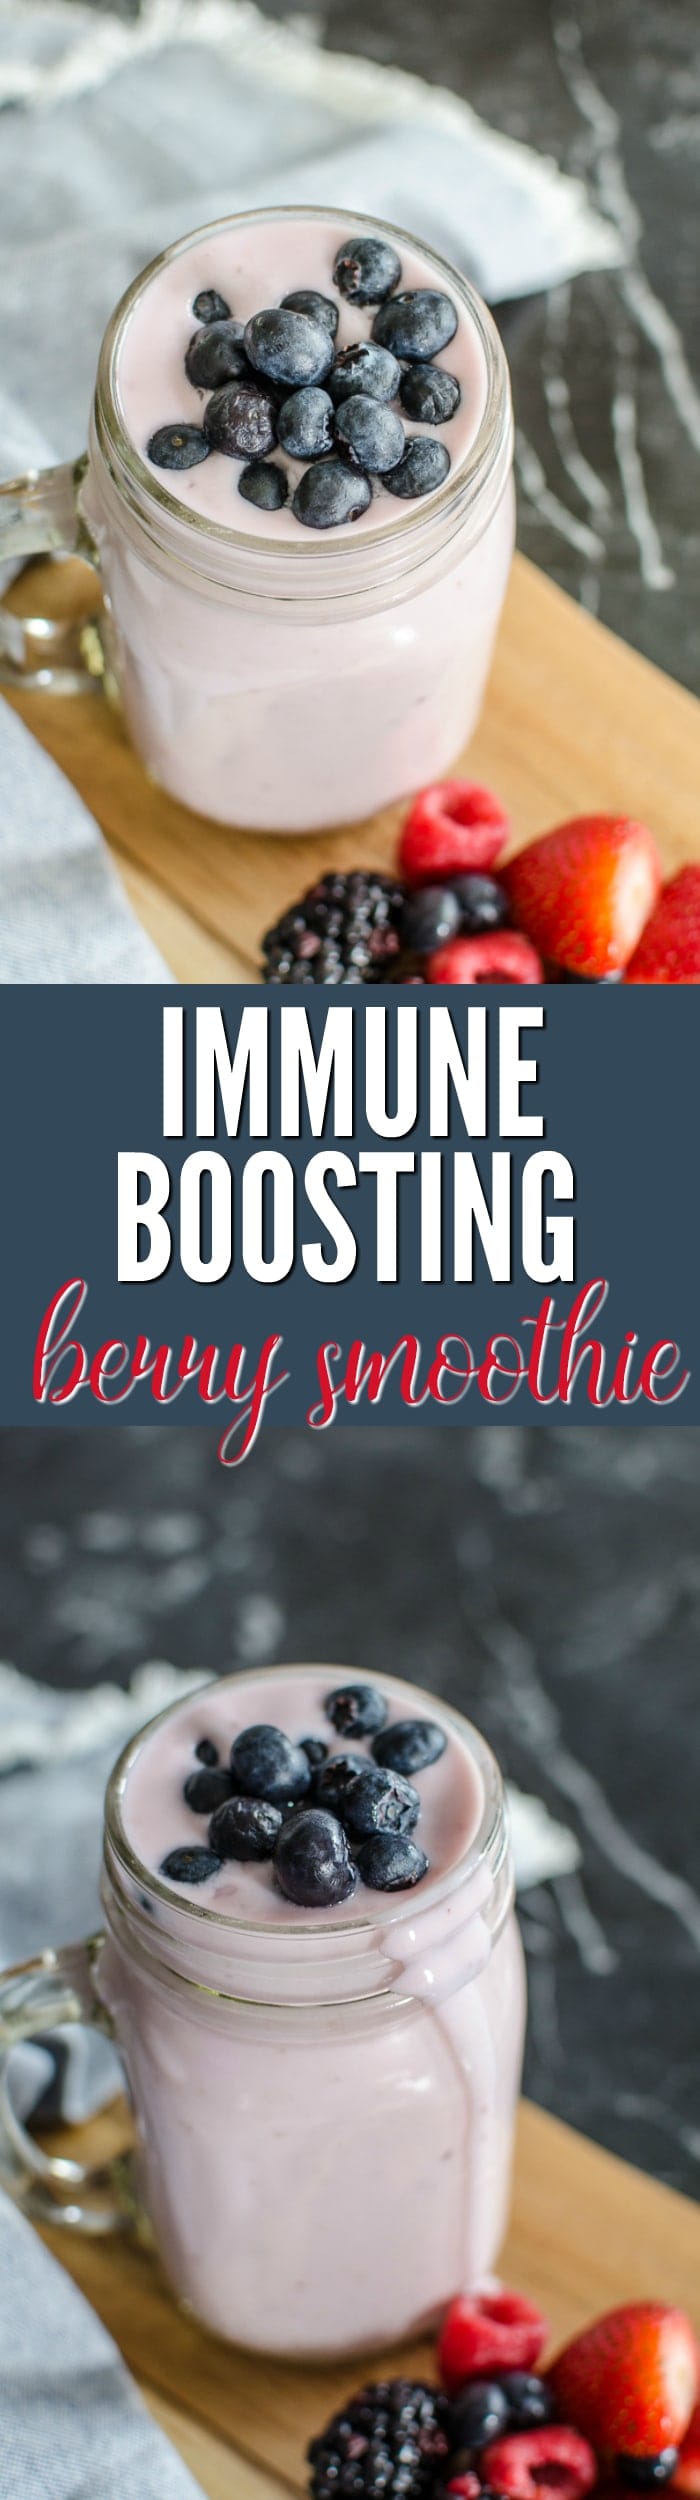 Immune Boosting Berry Smoothie